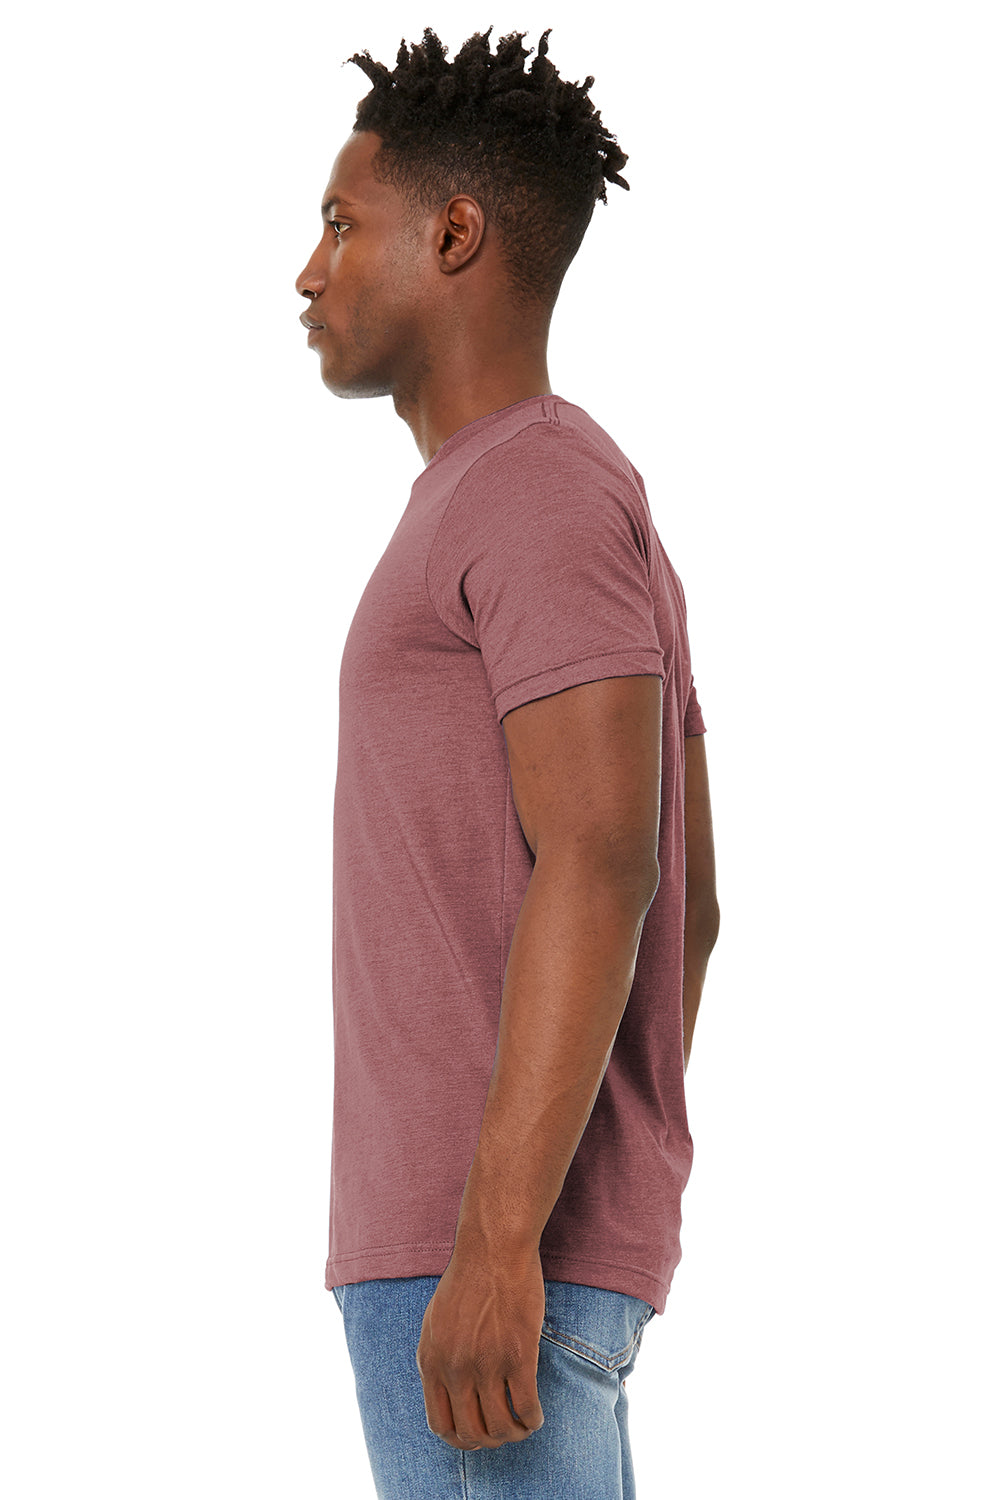 Bella + Canvas BC3301/3301C/3301 Mens Jersey Short Sleeve Crewneck T-Shirt Heather Mauve Model Side